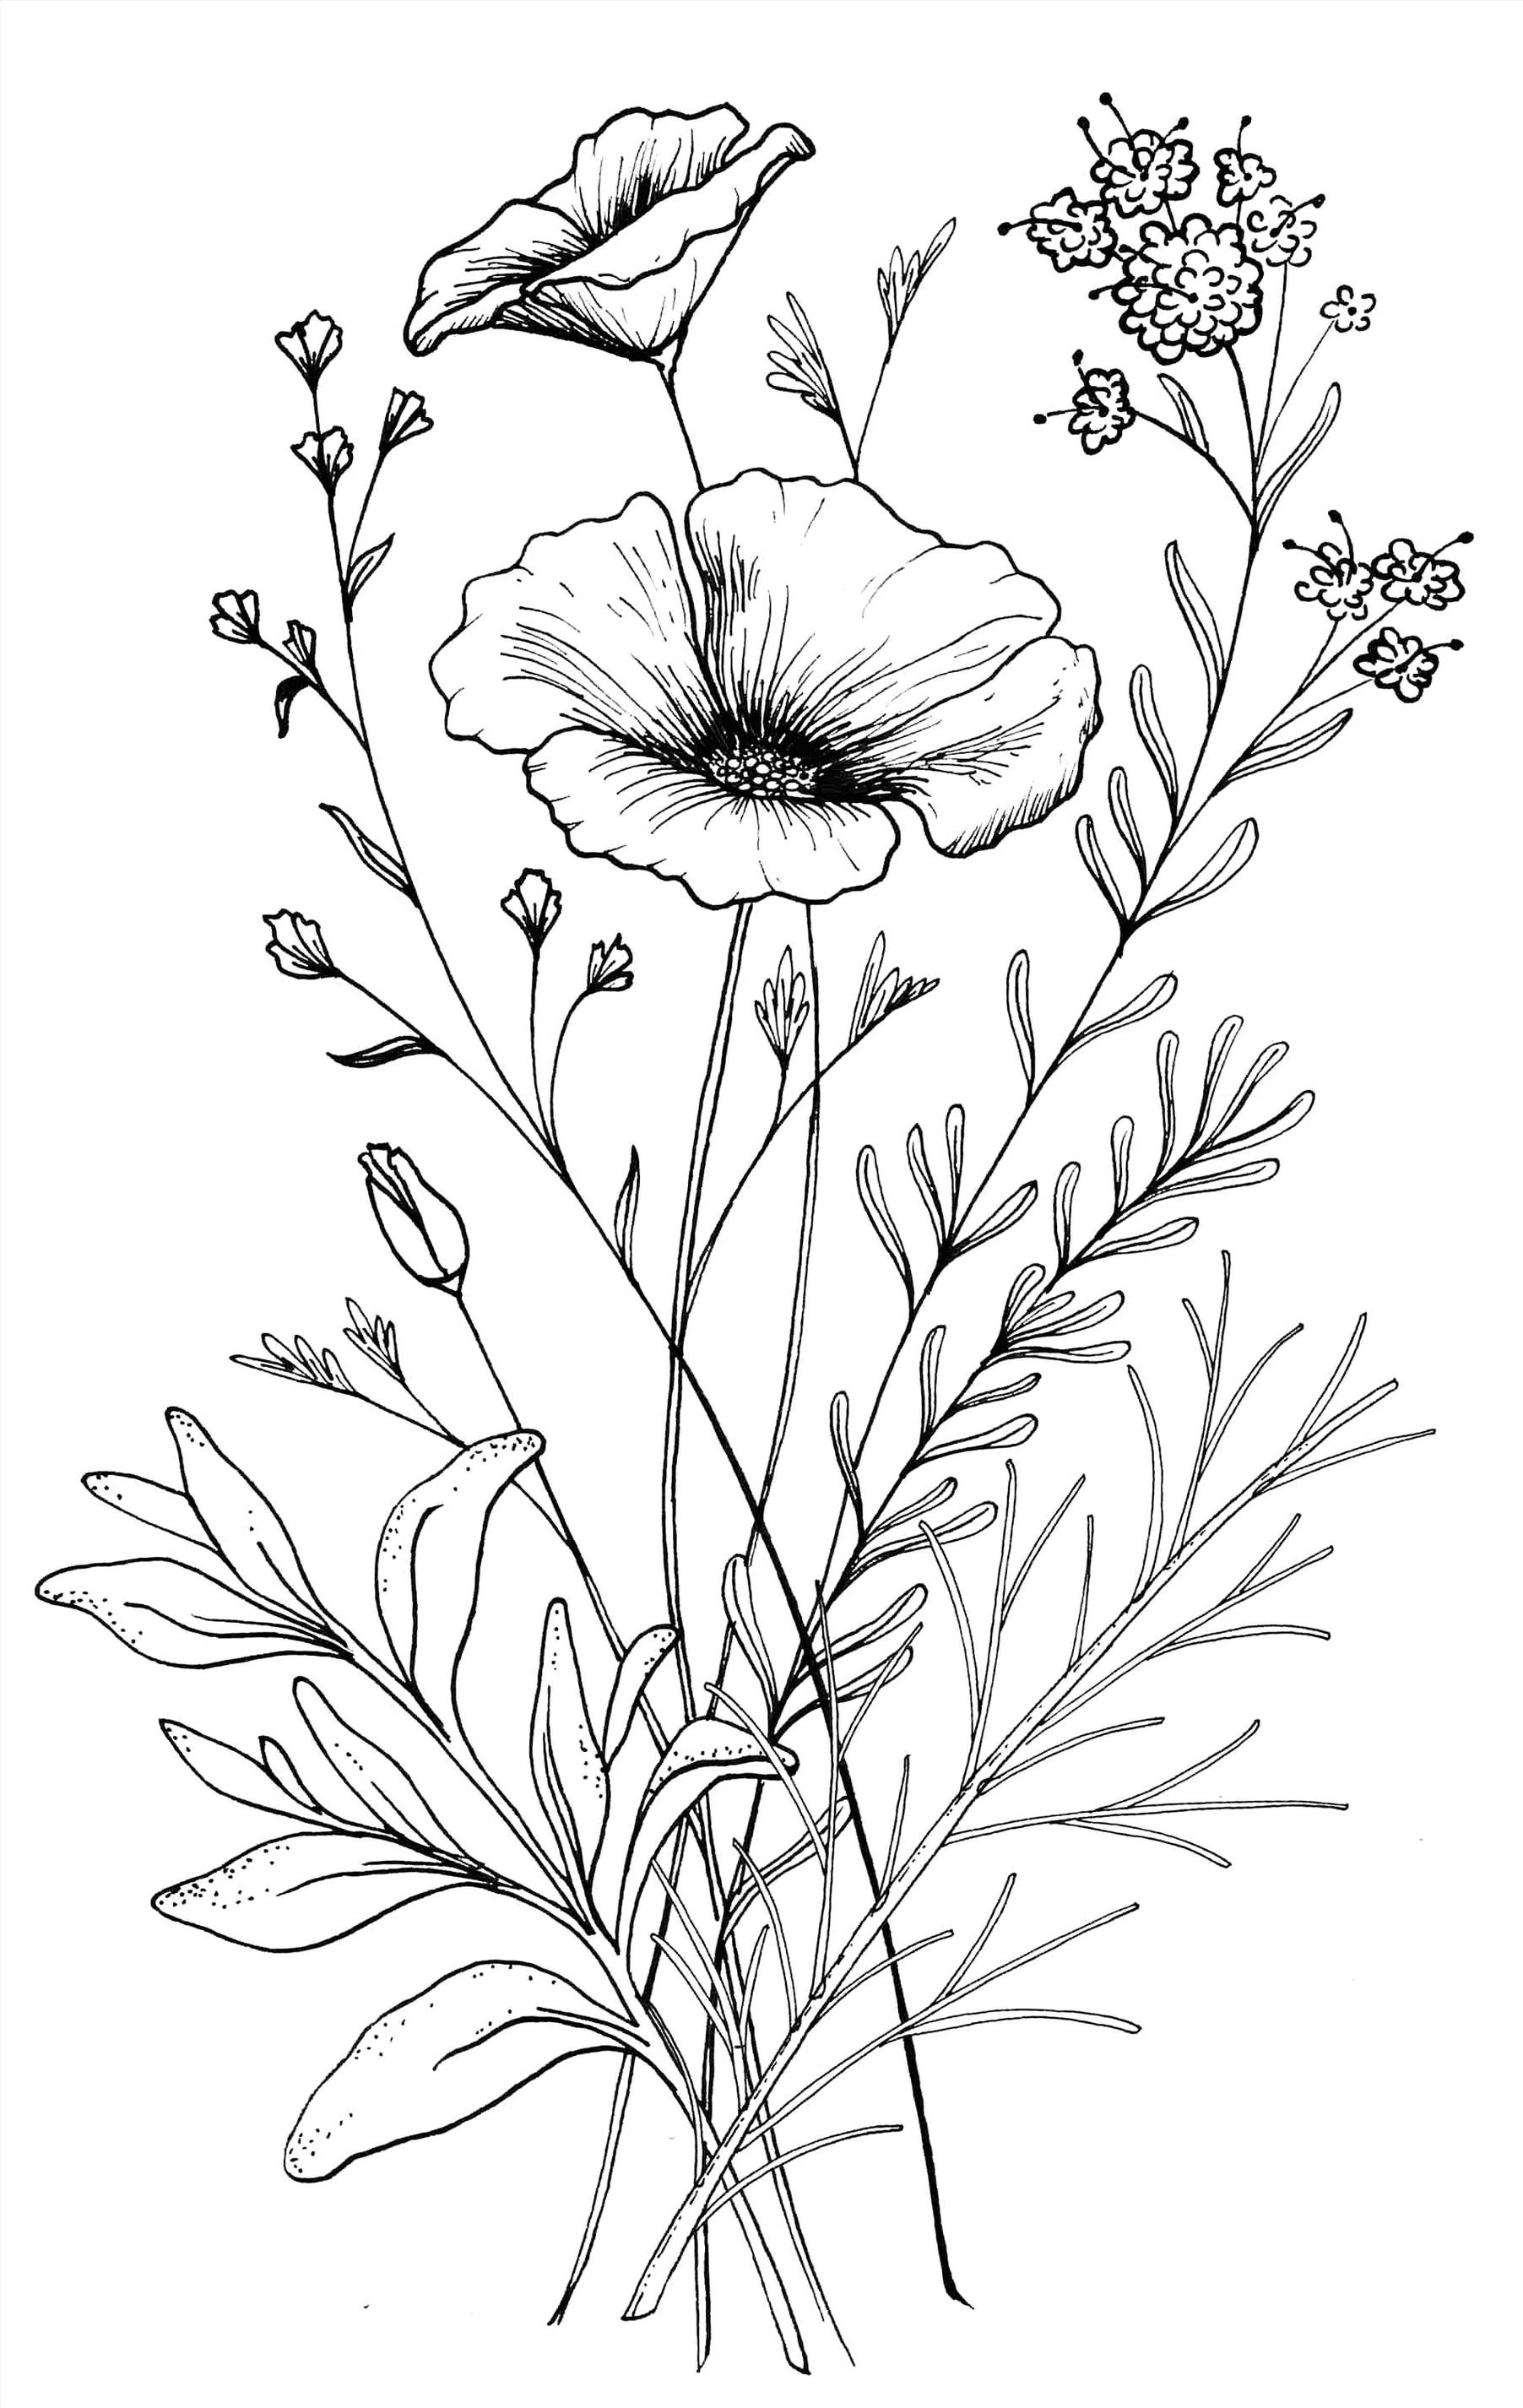 Paling Keren 13+ Gambar Sketsa Bunga Lengkap - Gambar Bunga Indah